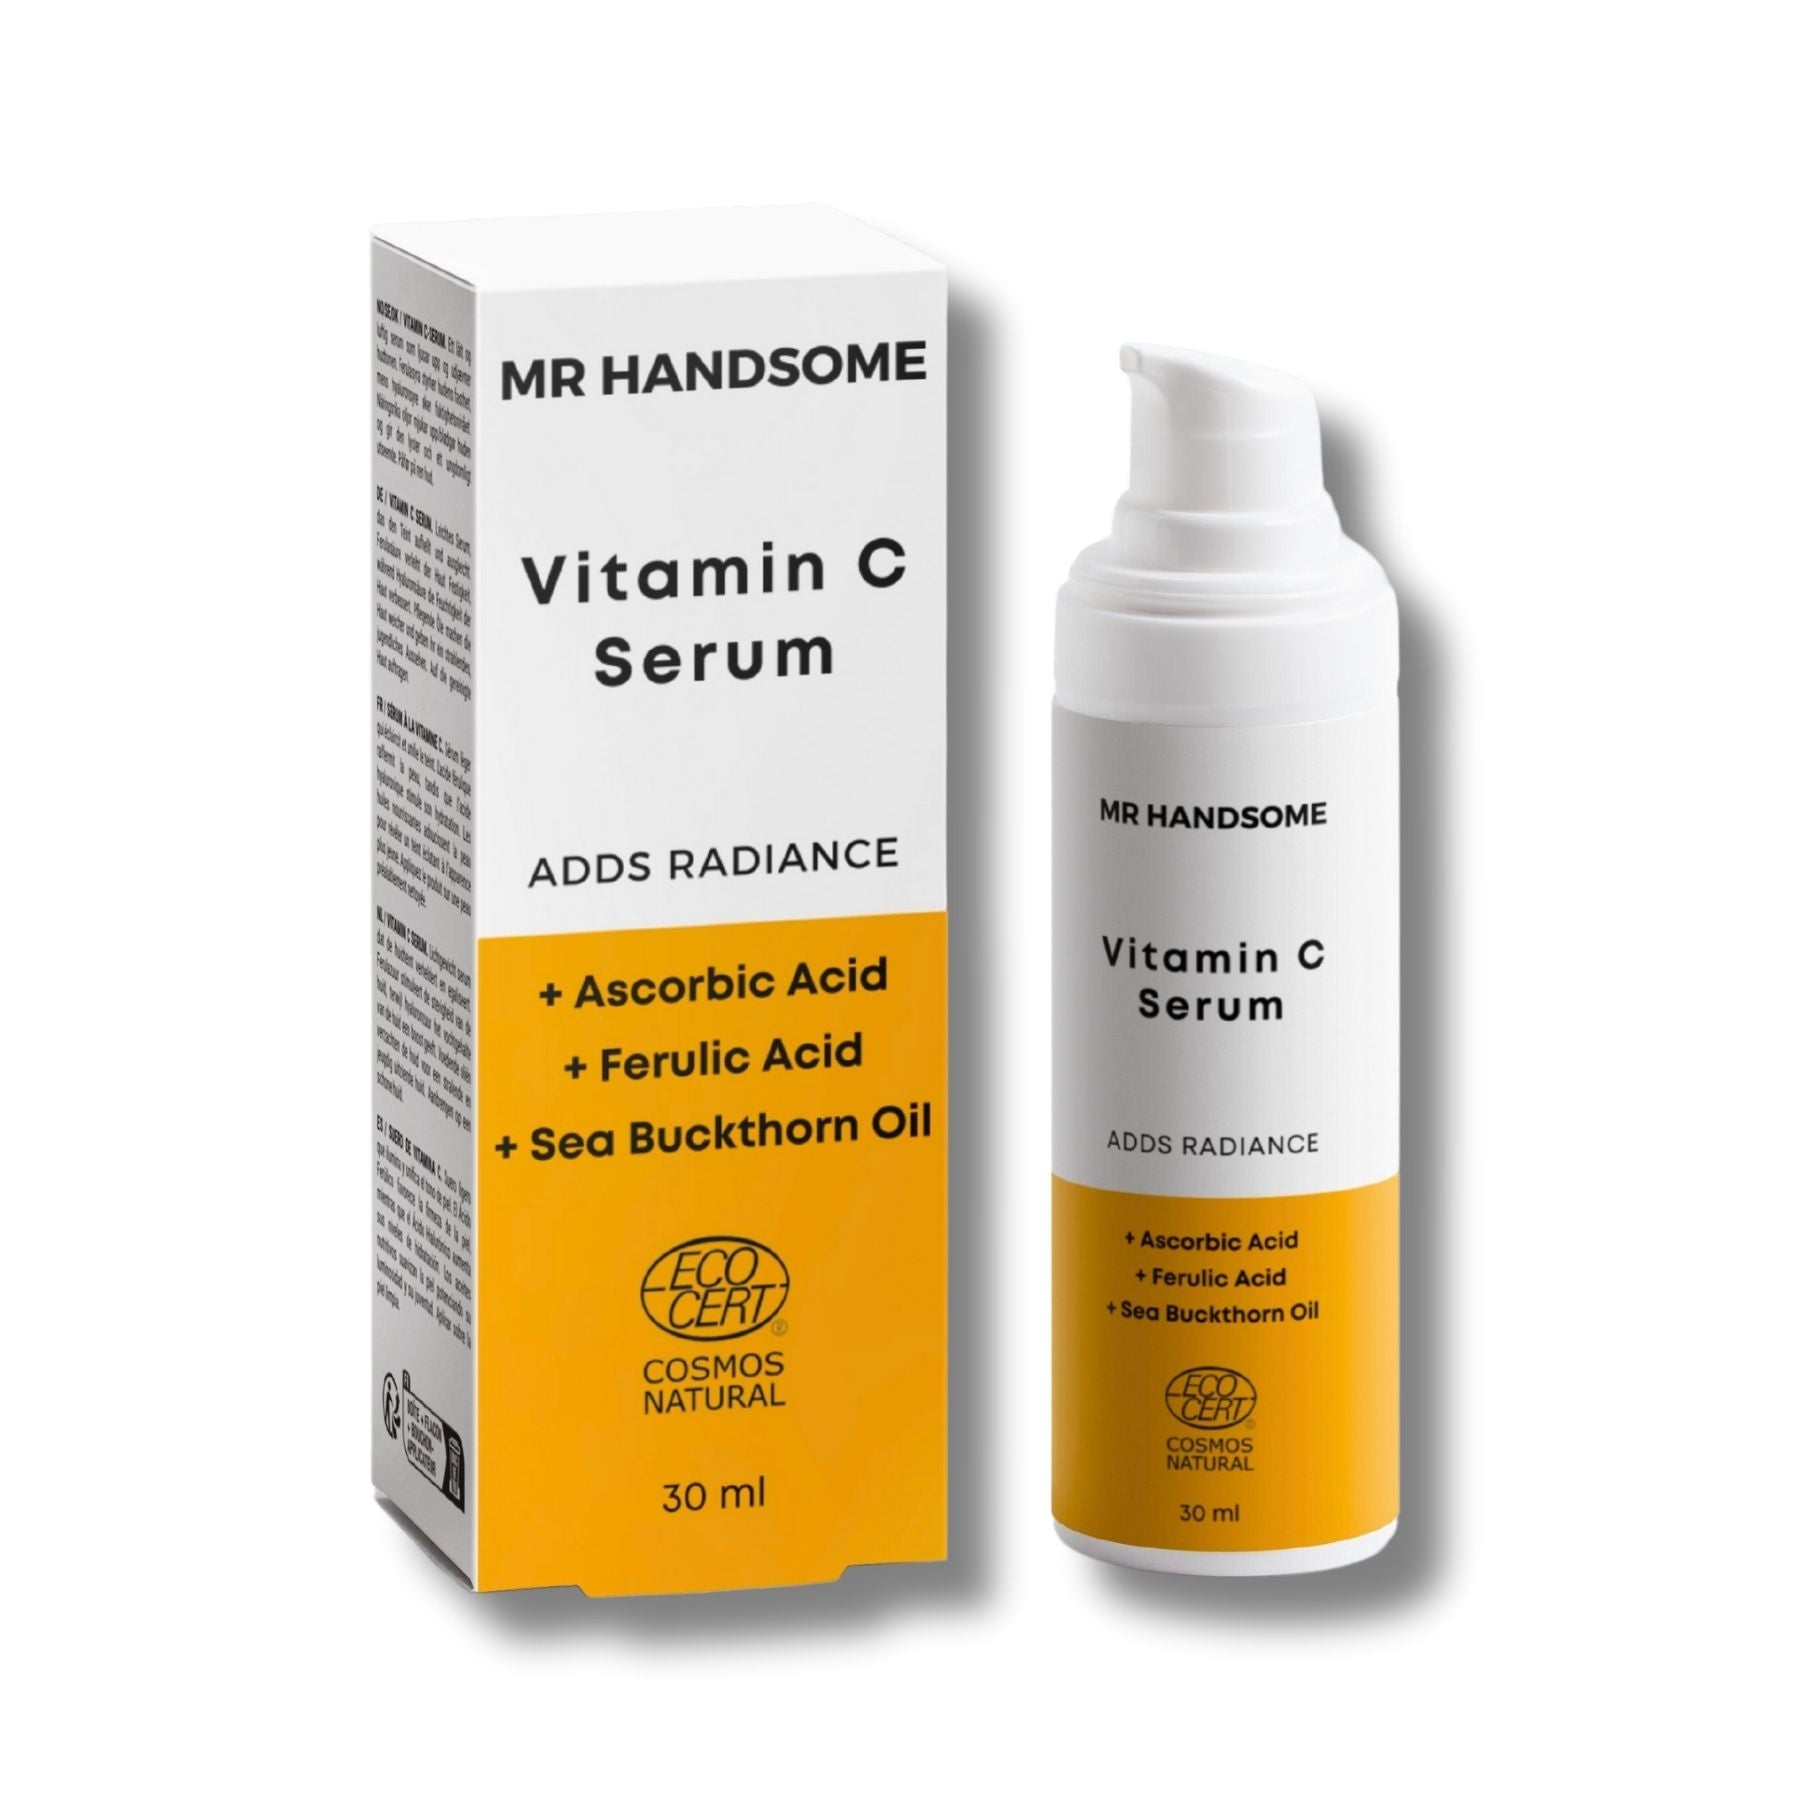 Vitamin C Serum - MR HANDSOME